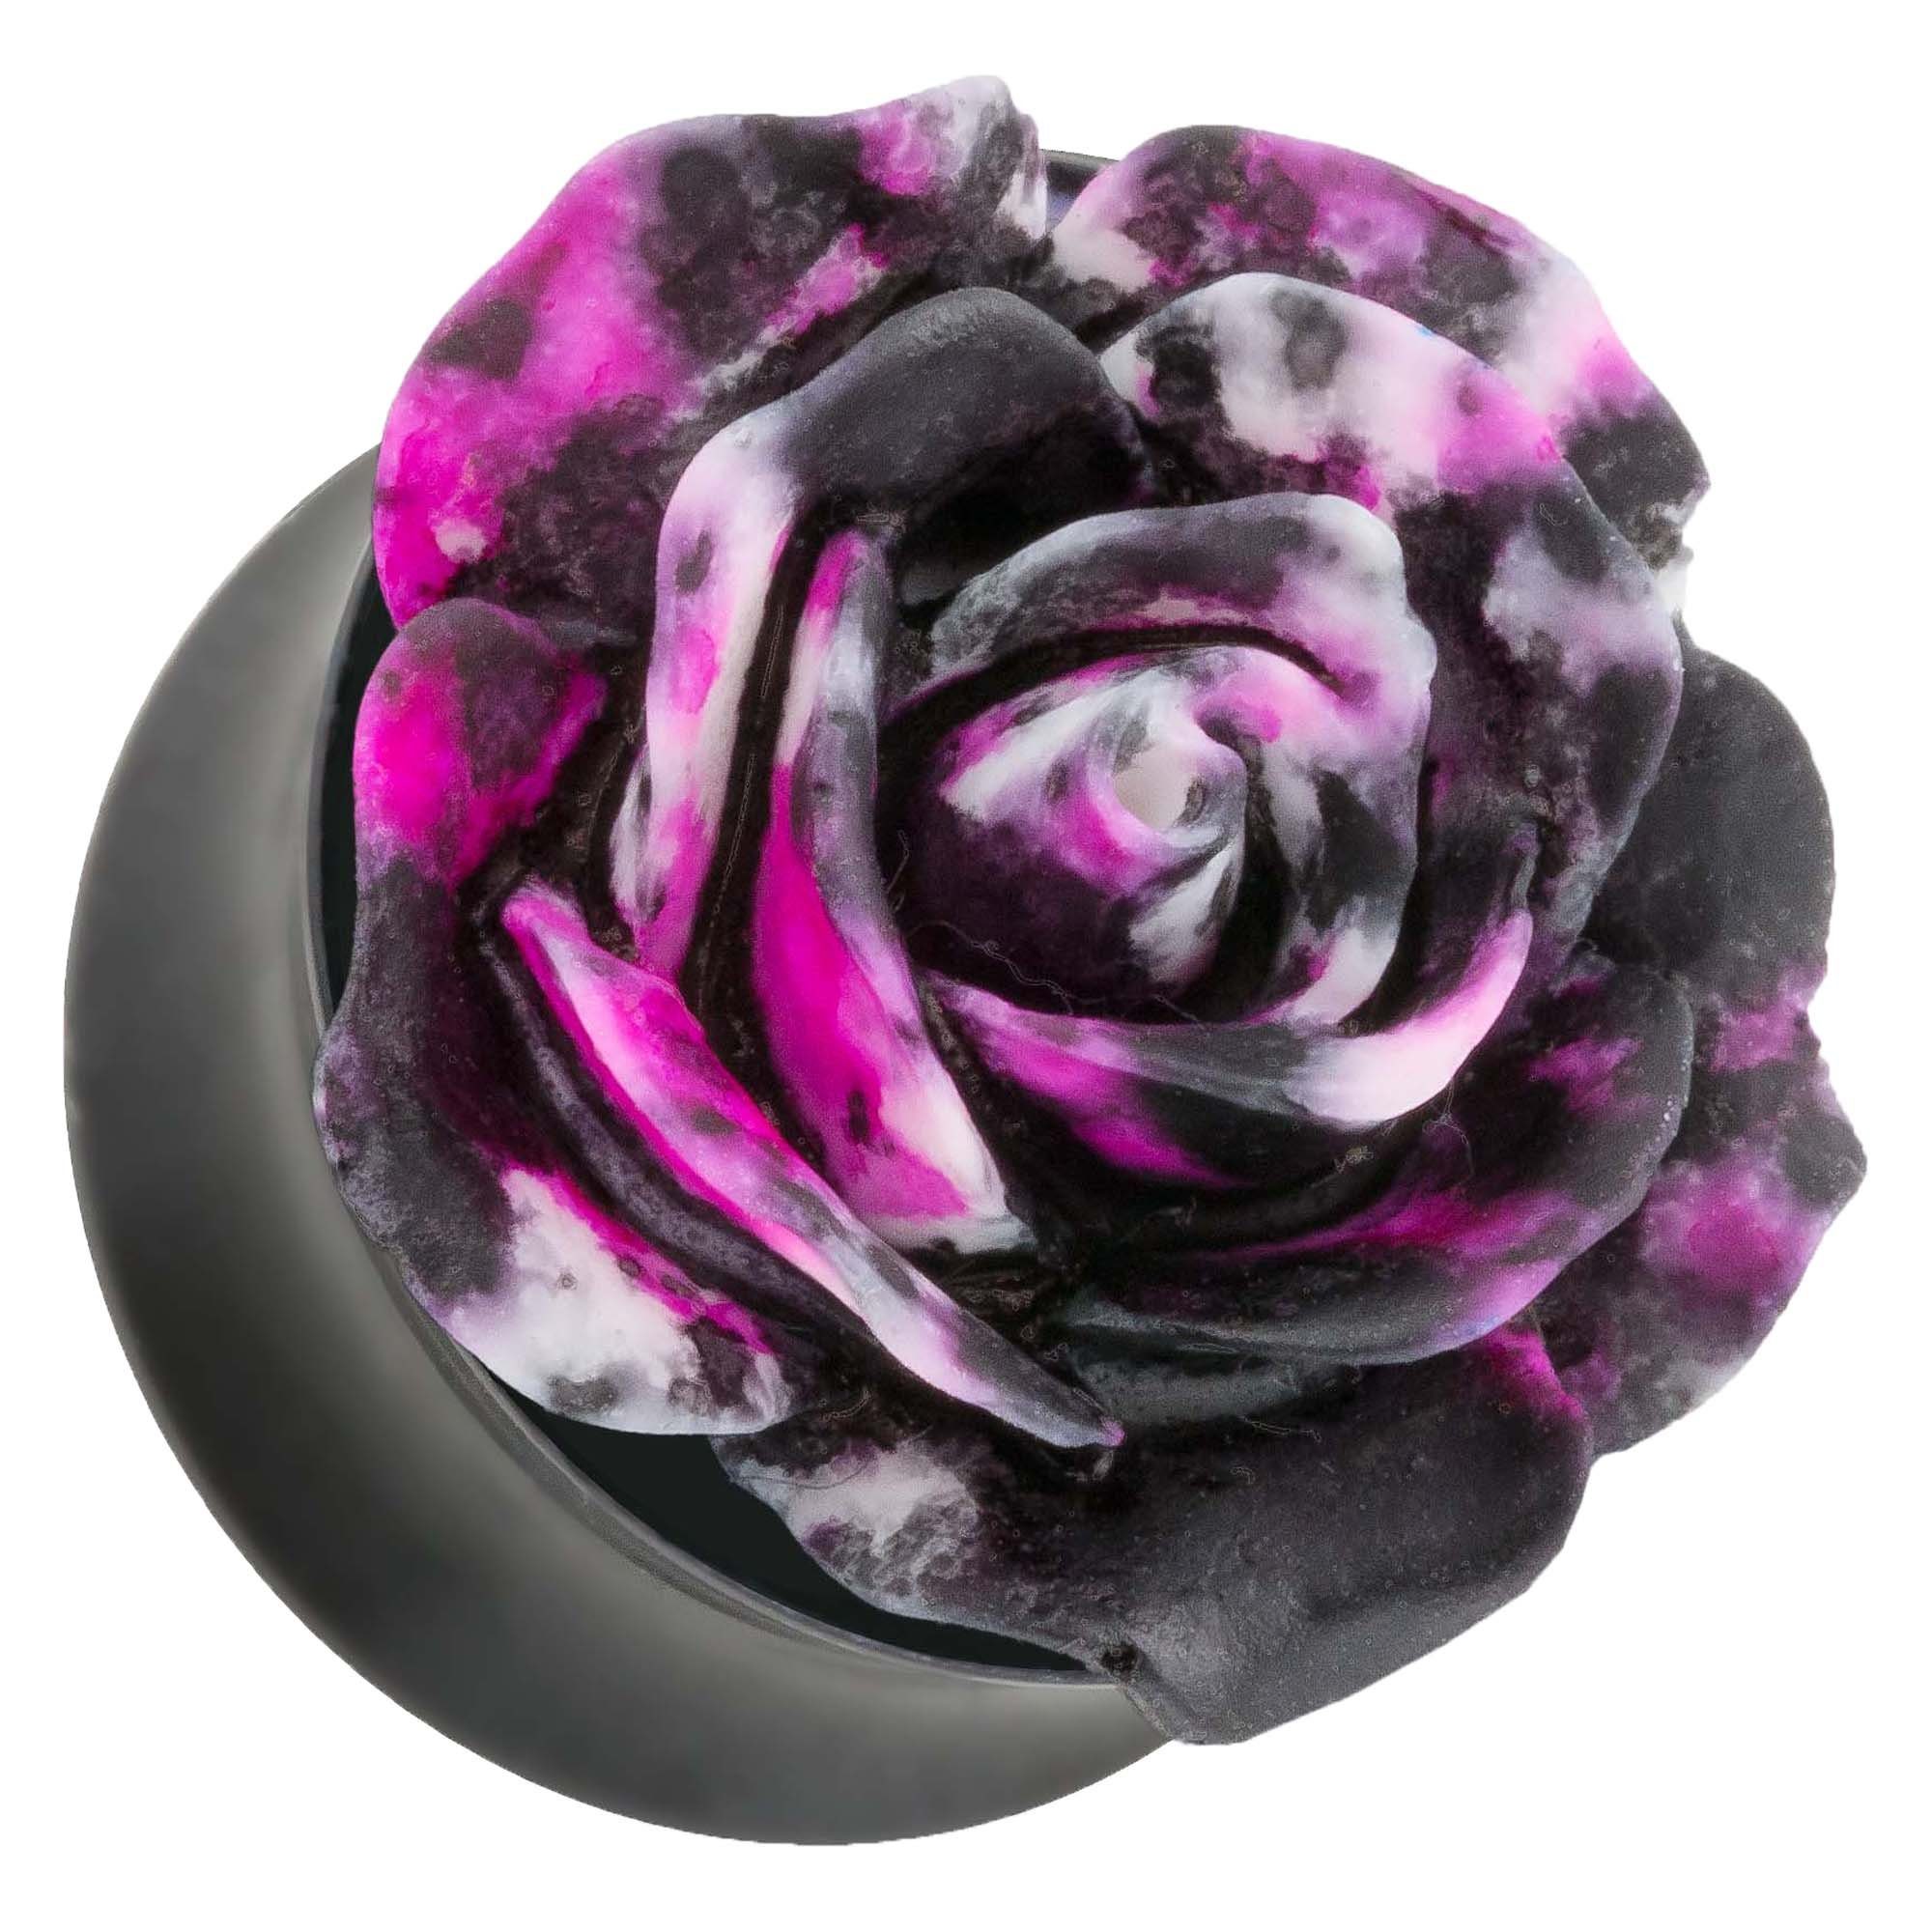 Taffstyle Plug Piercing Rose in 3D Optik Schwarz Weiß Pink, Ohr Plug Flesh Tunnel Piercing Ohrpiercing Rose in 3D Optik